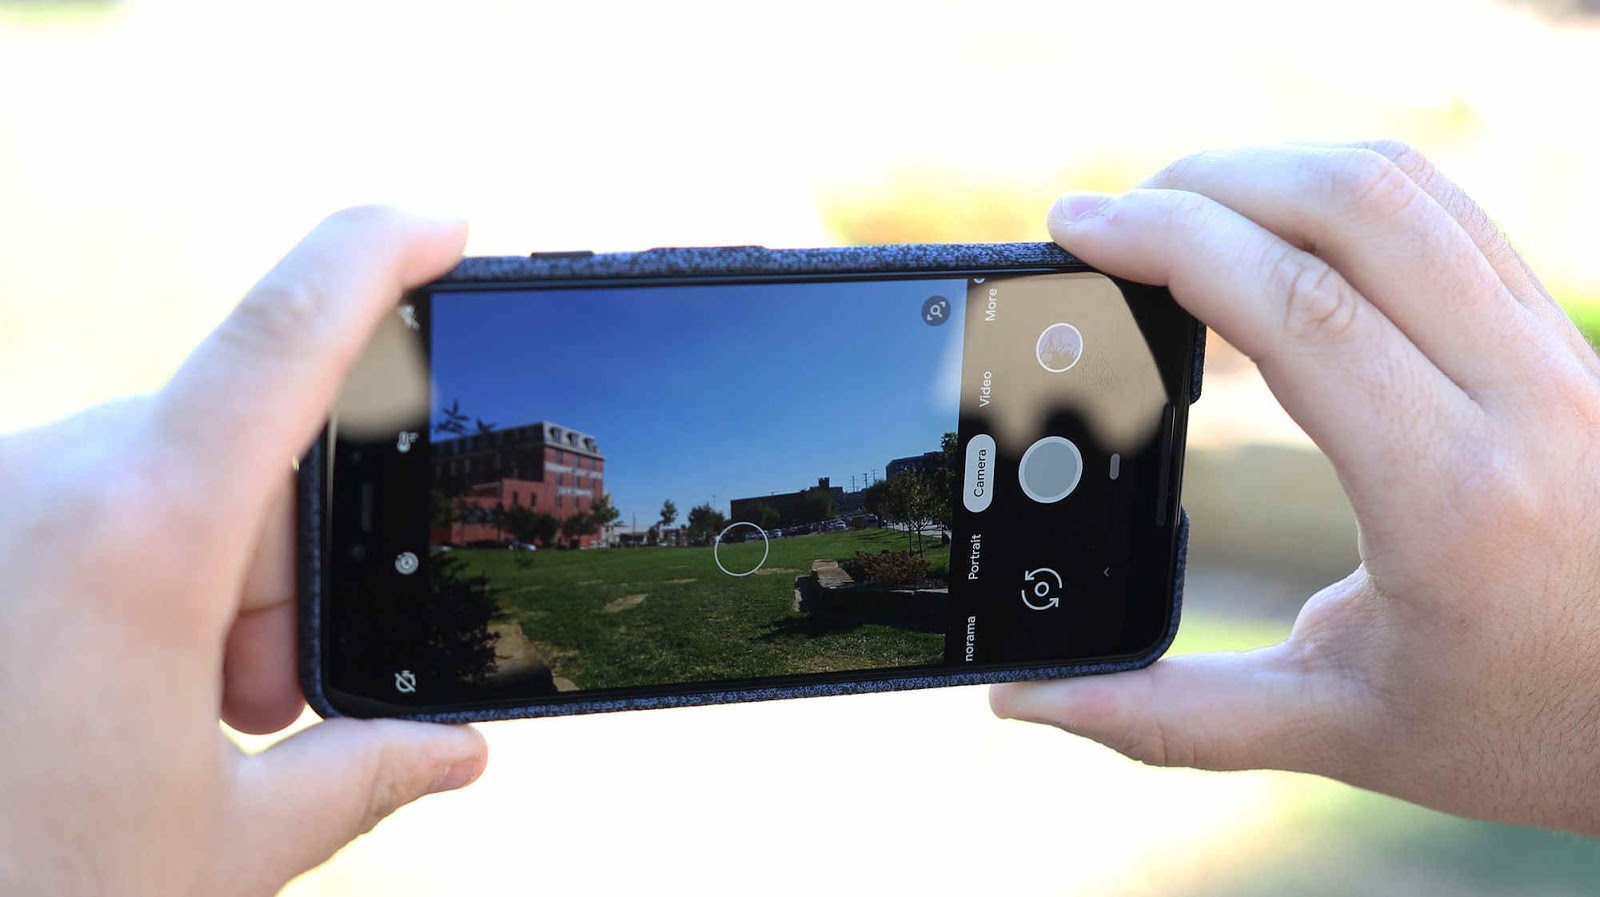 Redmi Note 6 Pro Гугл Камера